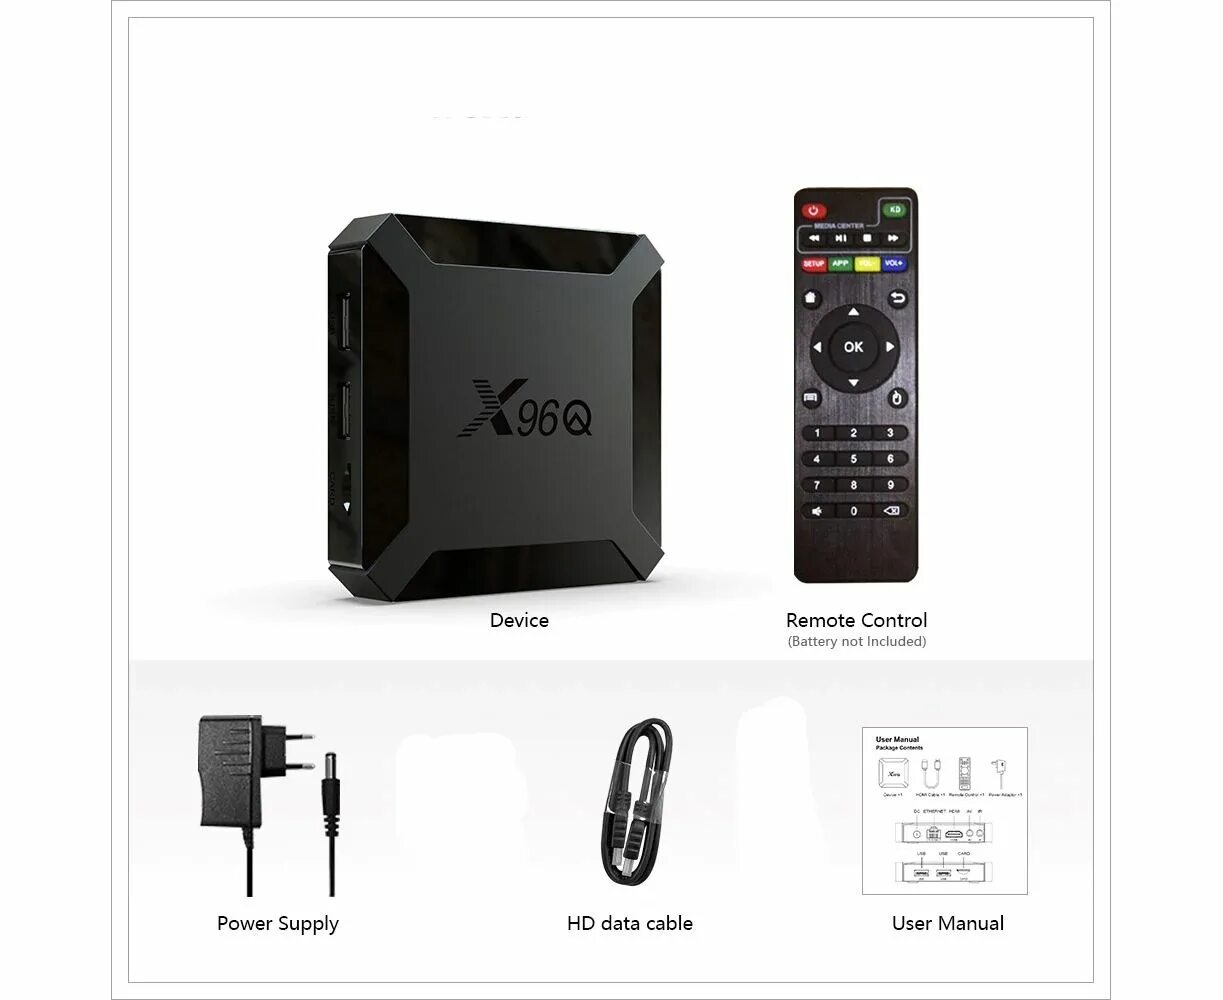 X96q Smart TV Box. ТВ приставка x96q. TV Box x96q Pro. Приставка смарт ТВ x96q. X96q обзоры